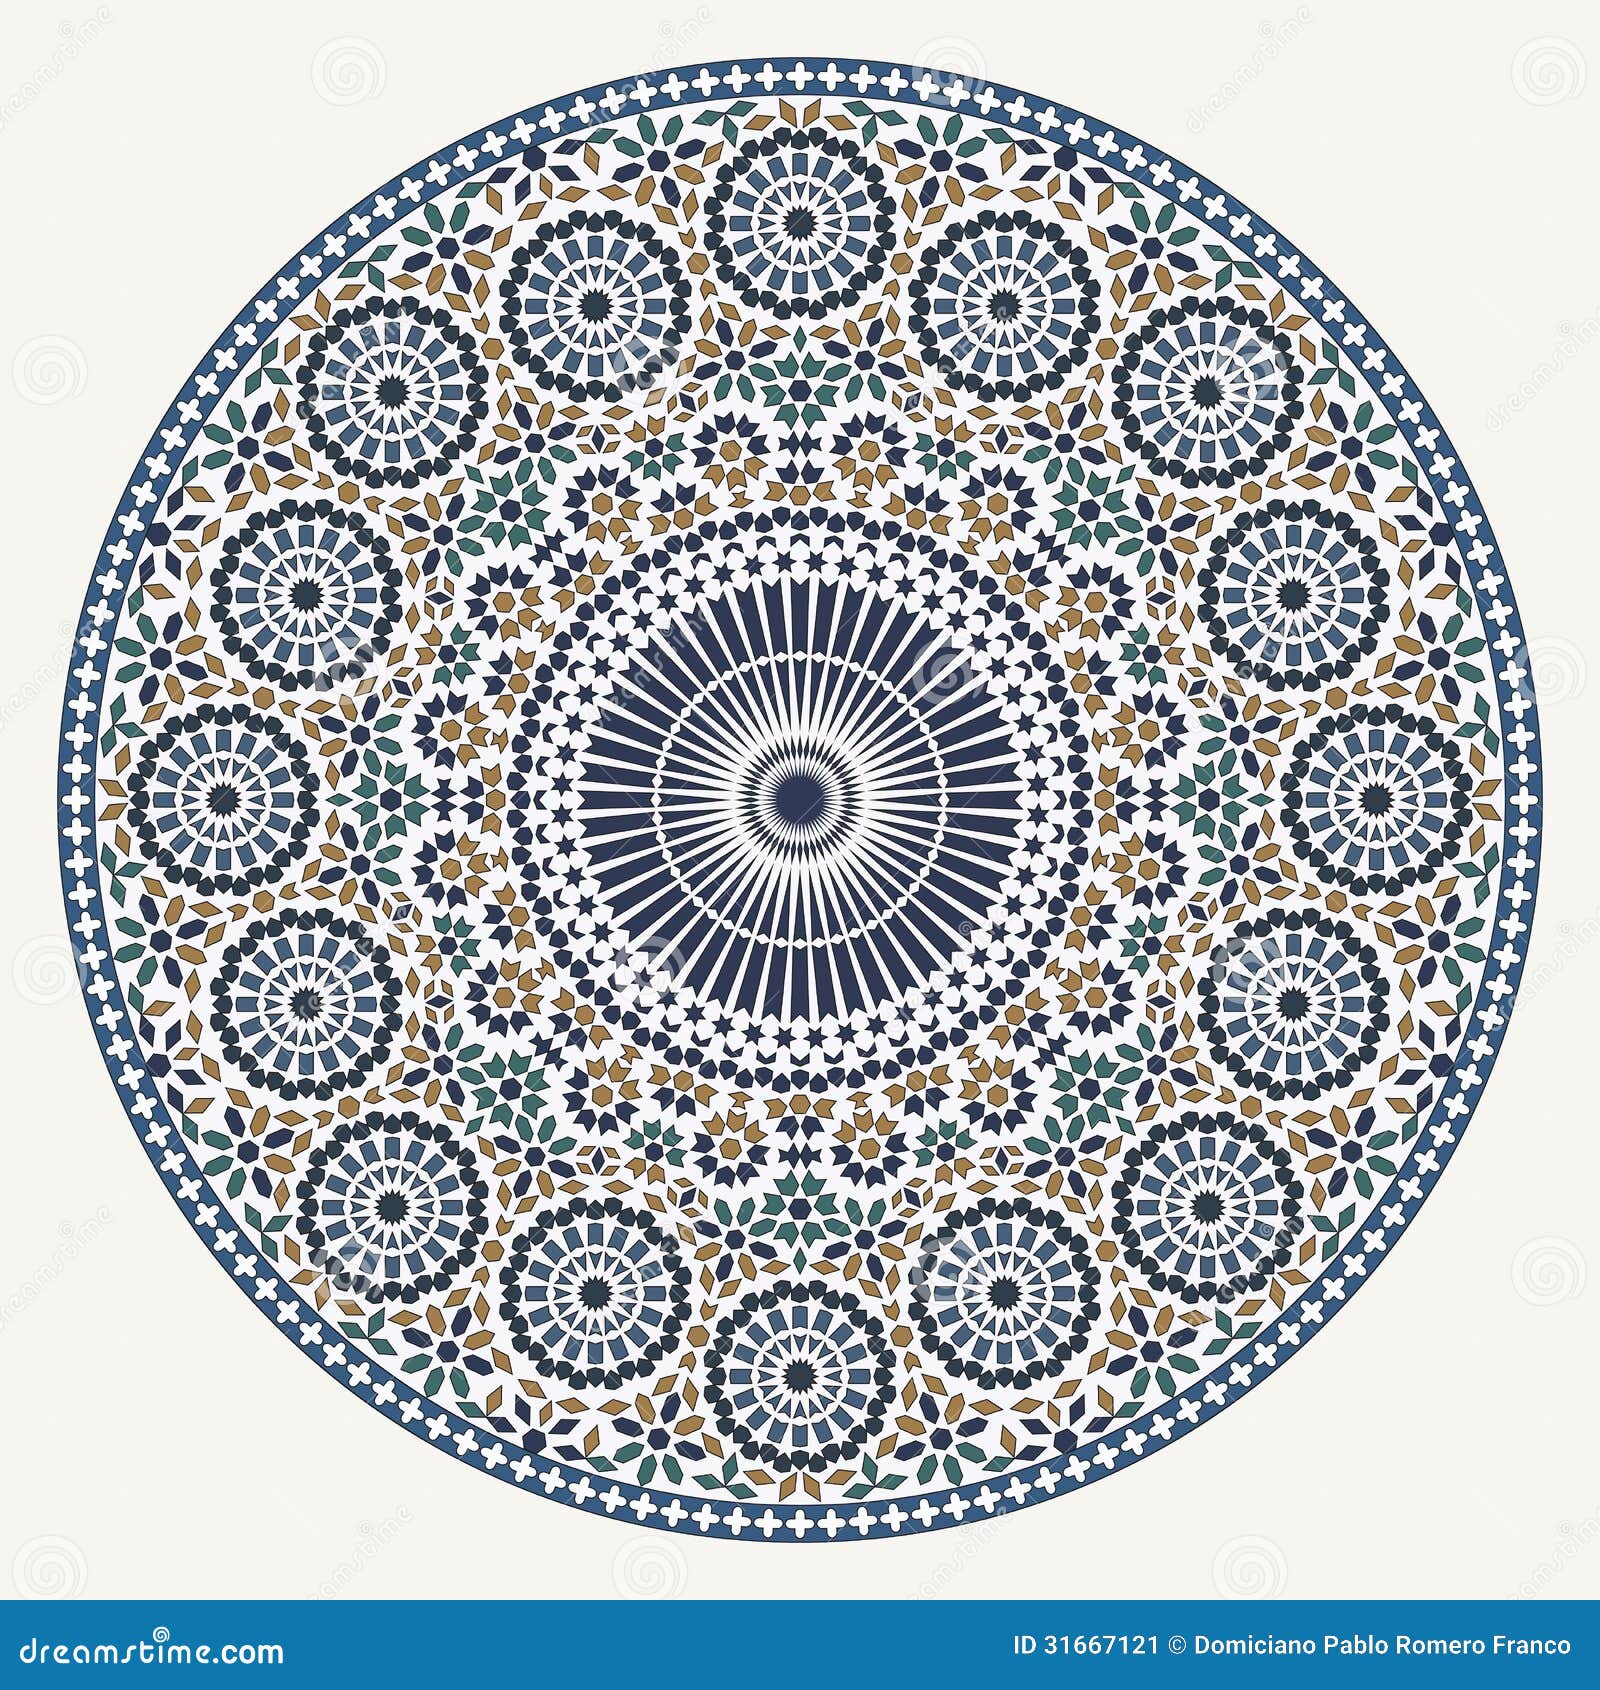 Instant Download Printable Purple/Pink Hexagon Arabic Alphabet with Transliteration Art Print